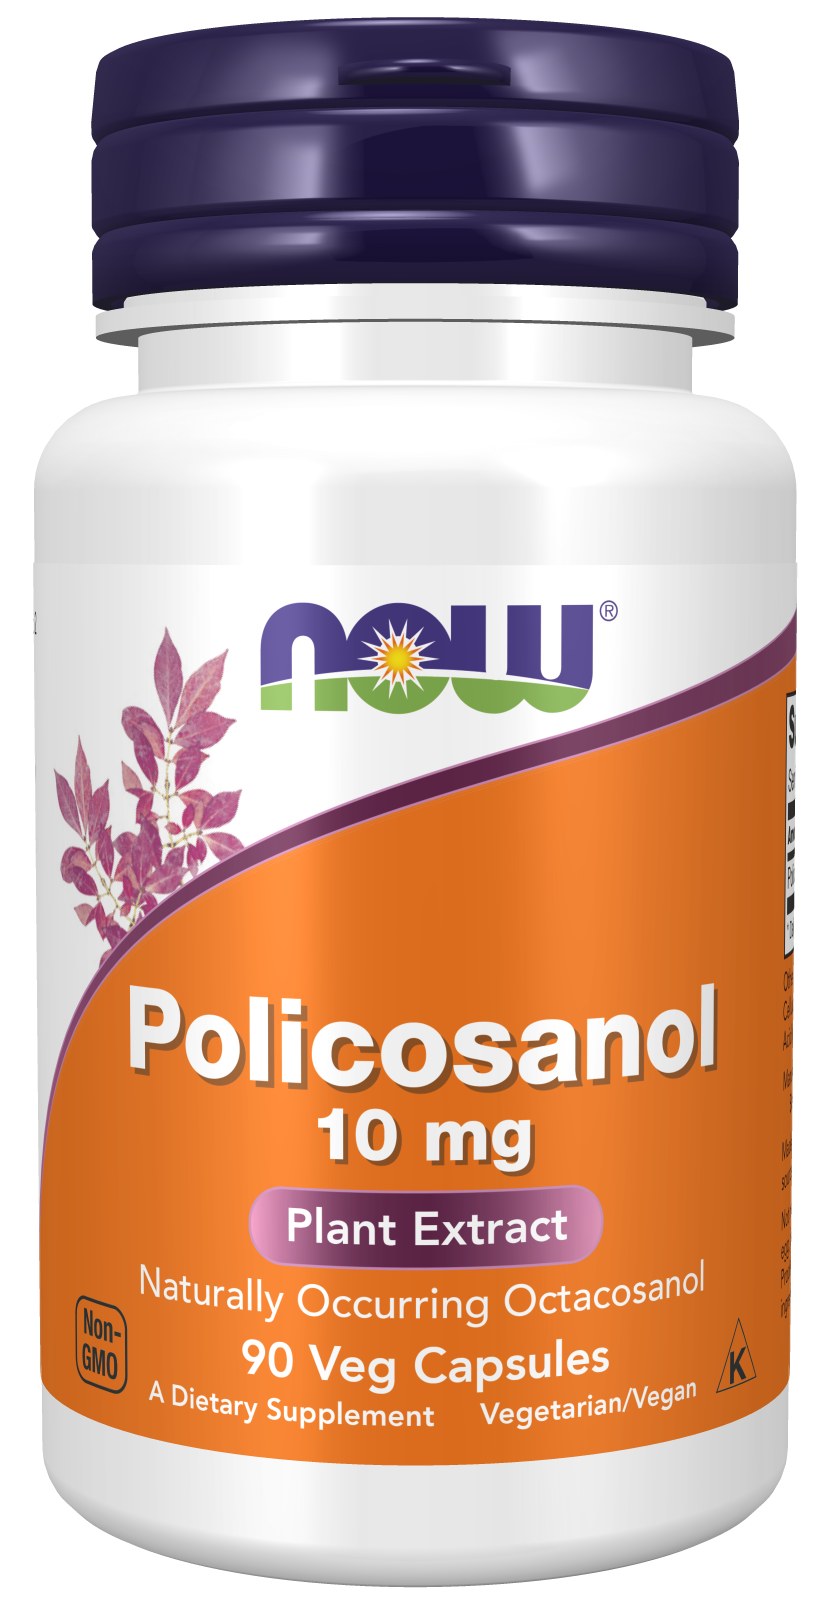 Policosanol 10 mg - 90 Veg Capsules Bottle Front